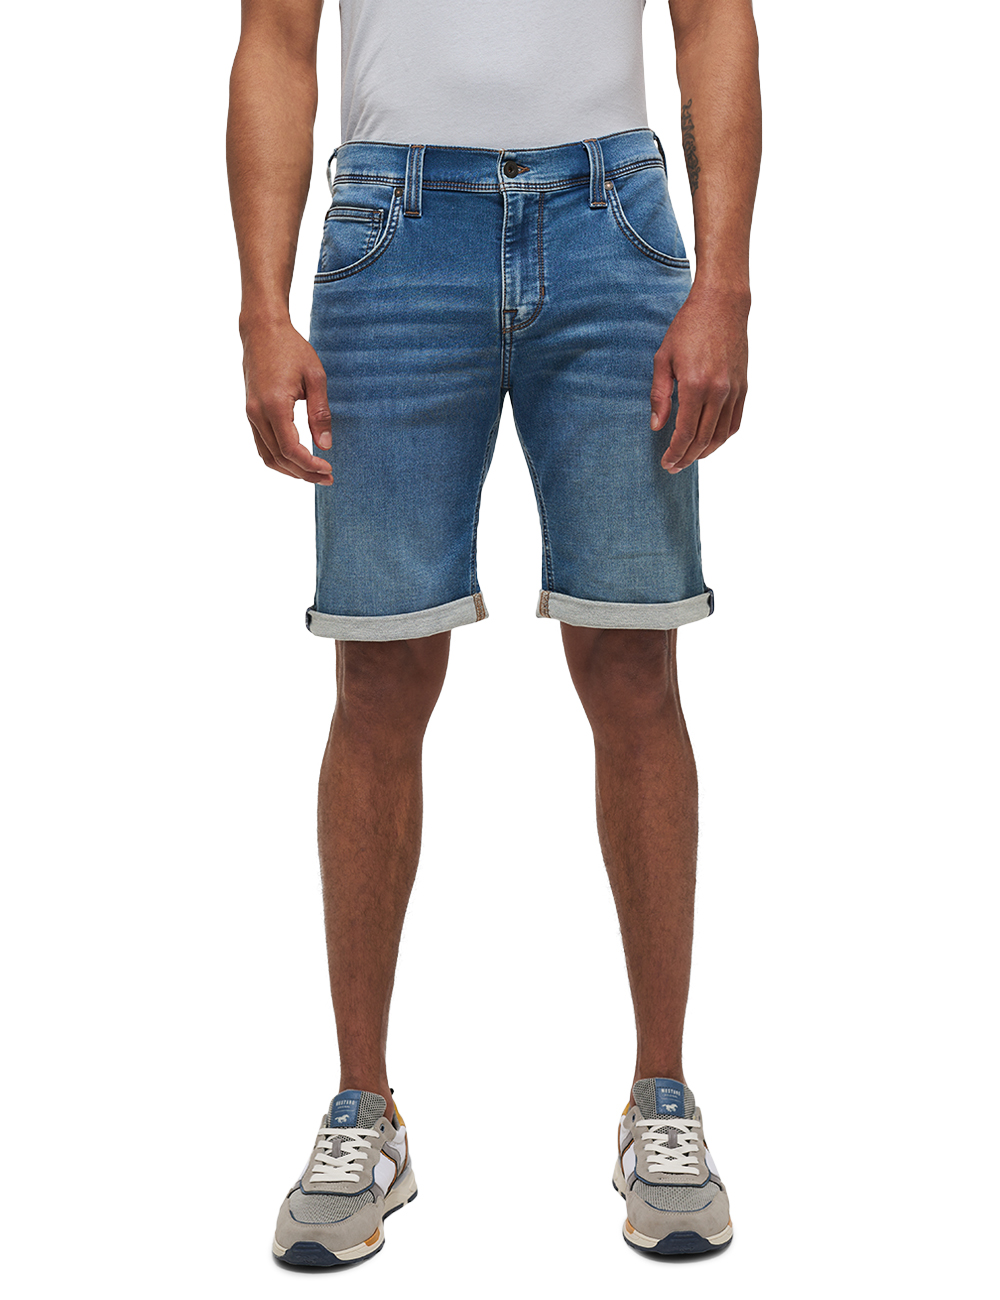 Jeans Shorts - online jetzt shoppen Modetrends aktuelle